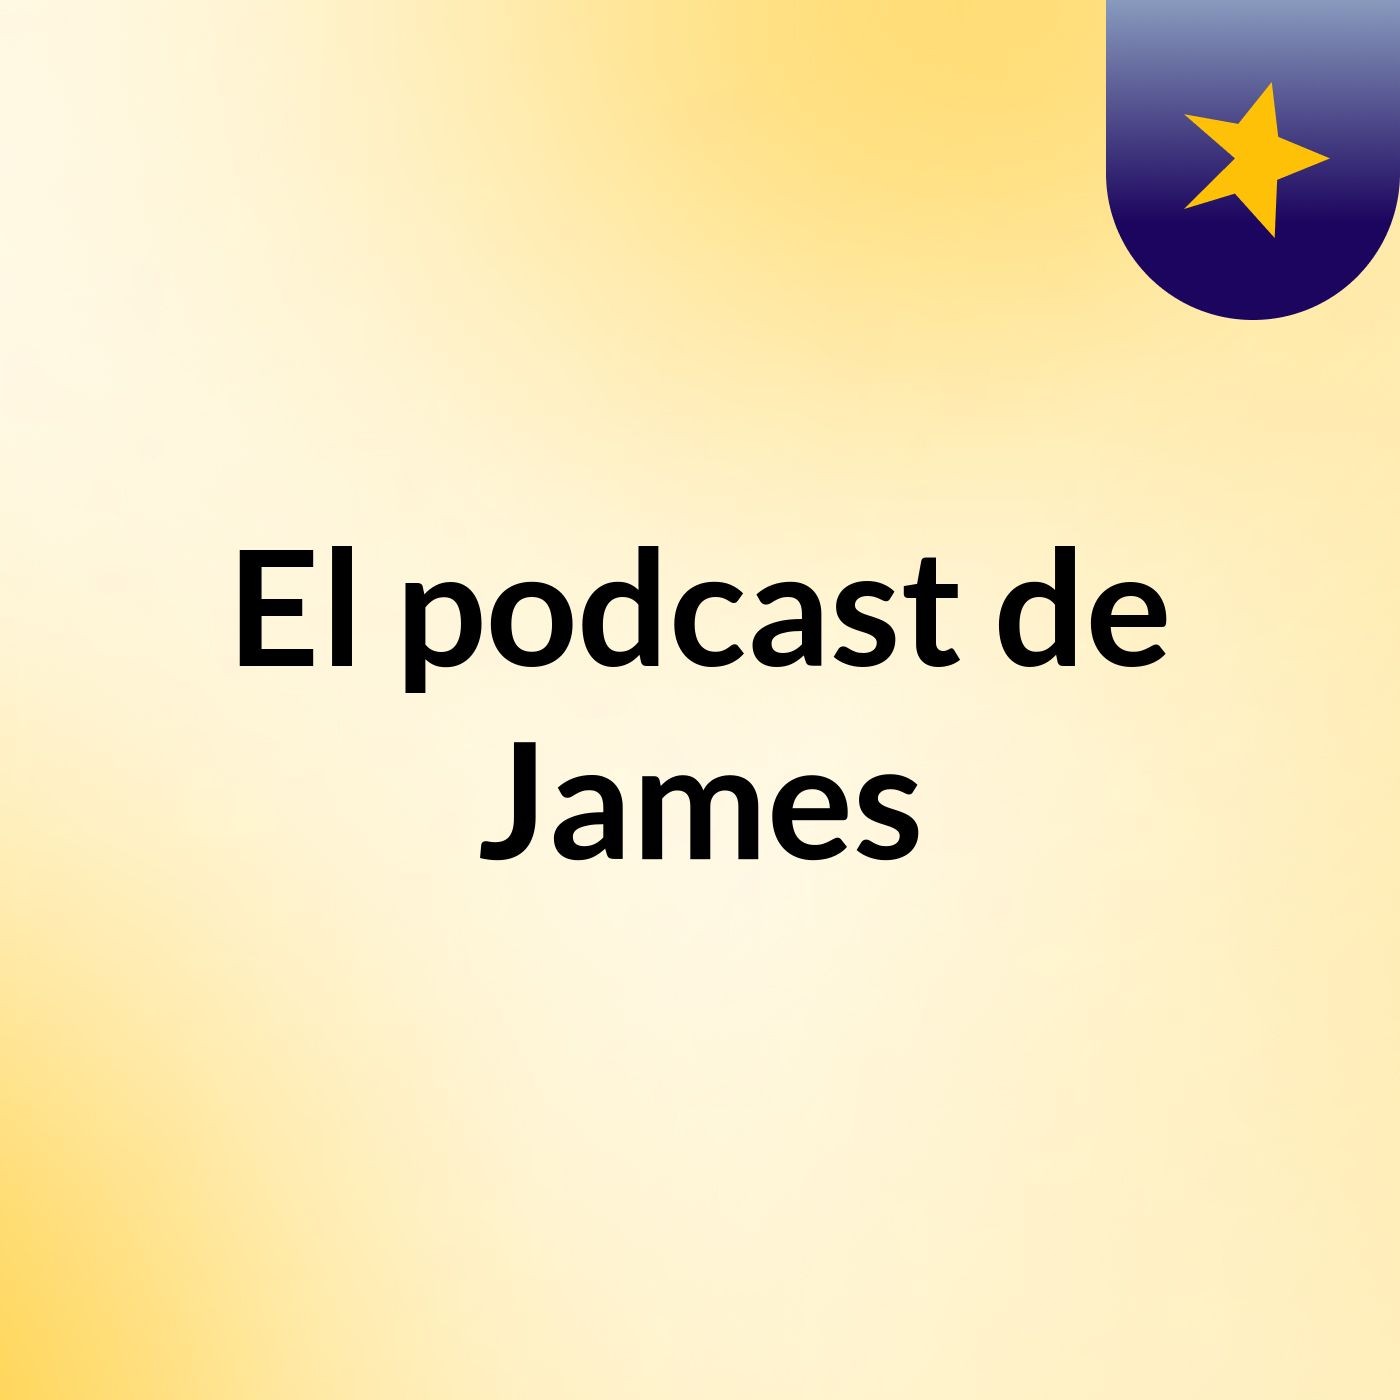 Episodio 2 - El podcast de James